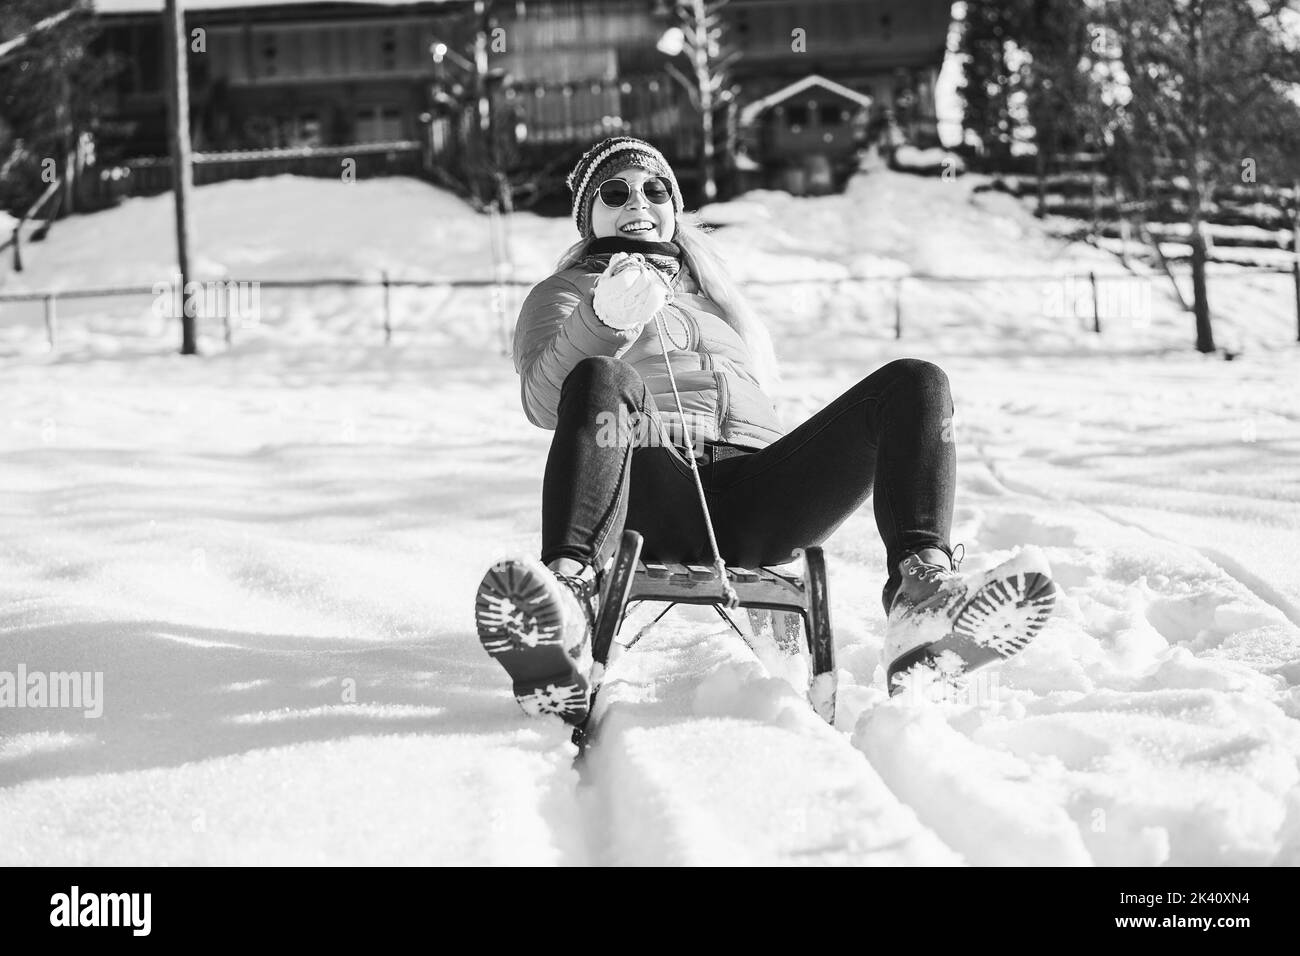 Crazy girl speeding with vintage sledding on snow high mountain - Focus on face - Black and white editing Stock Photo